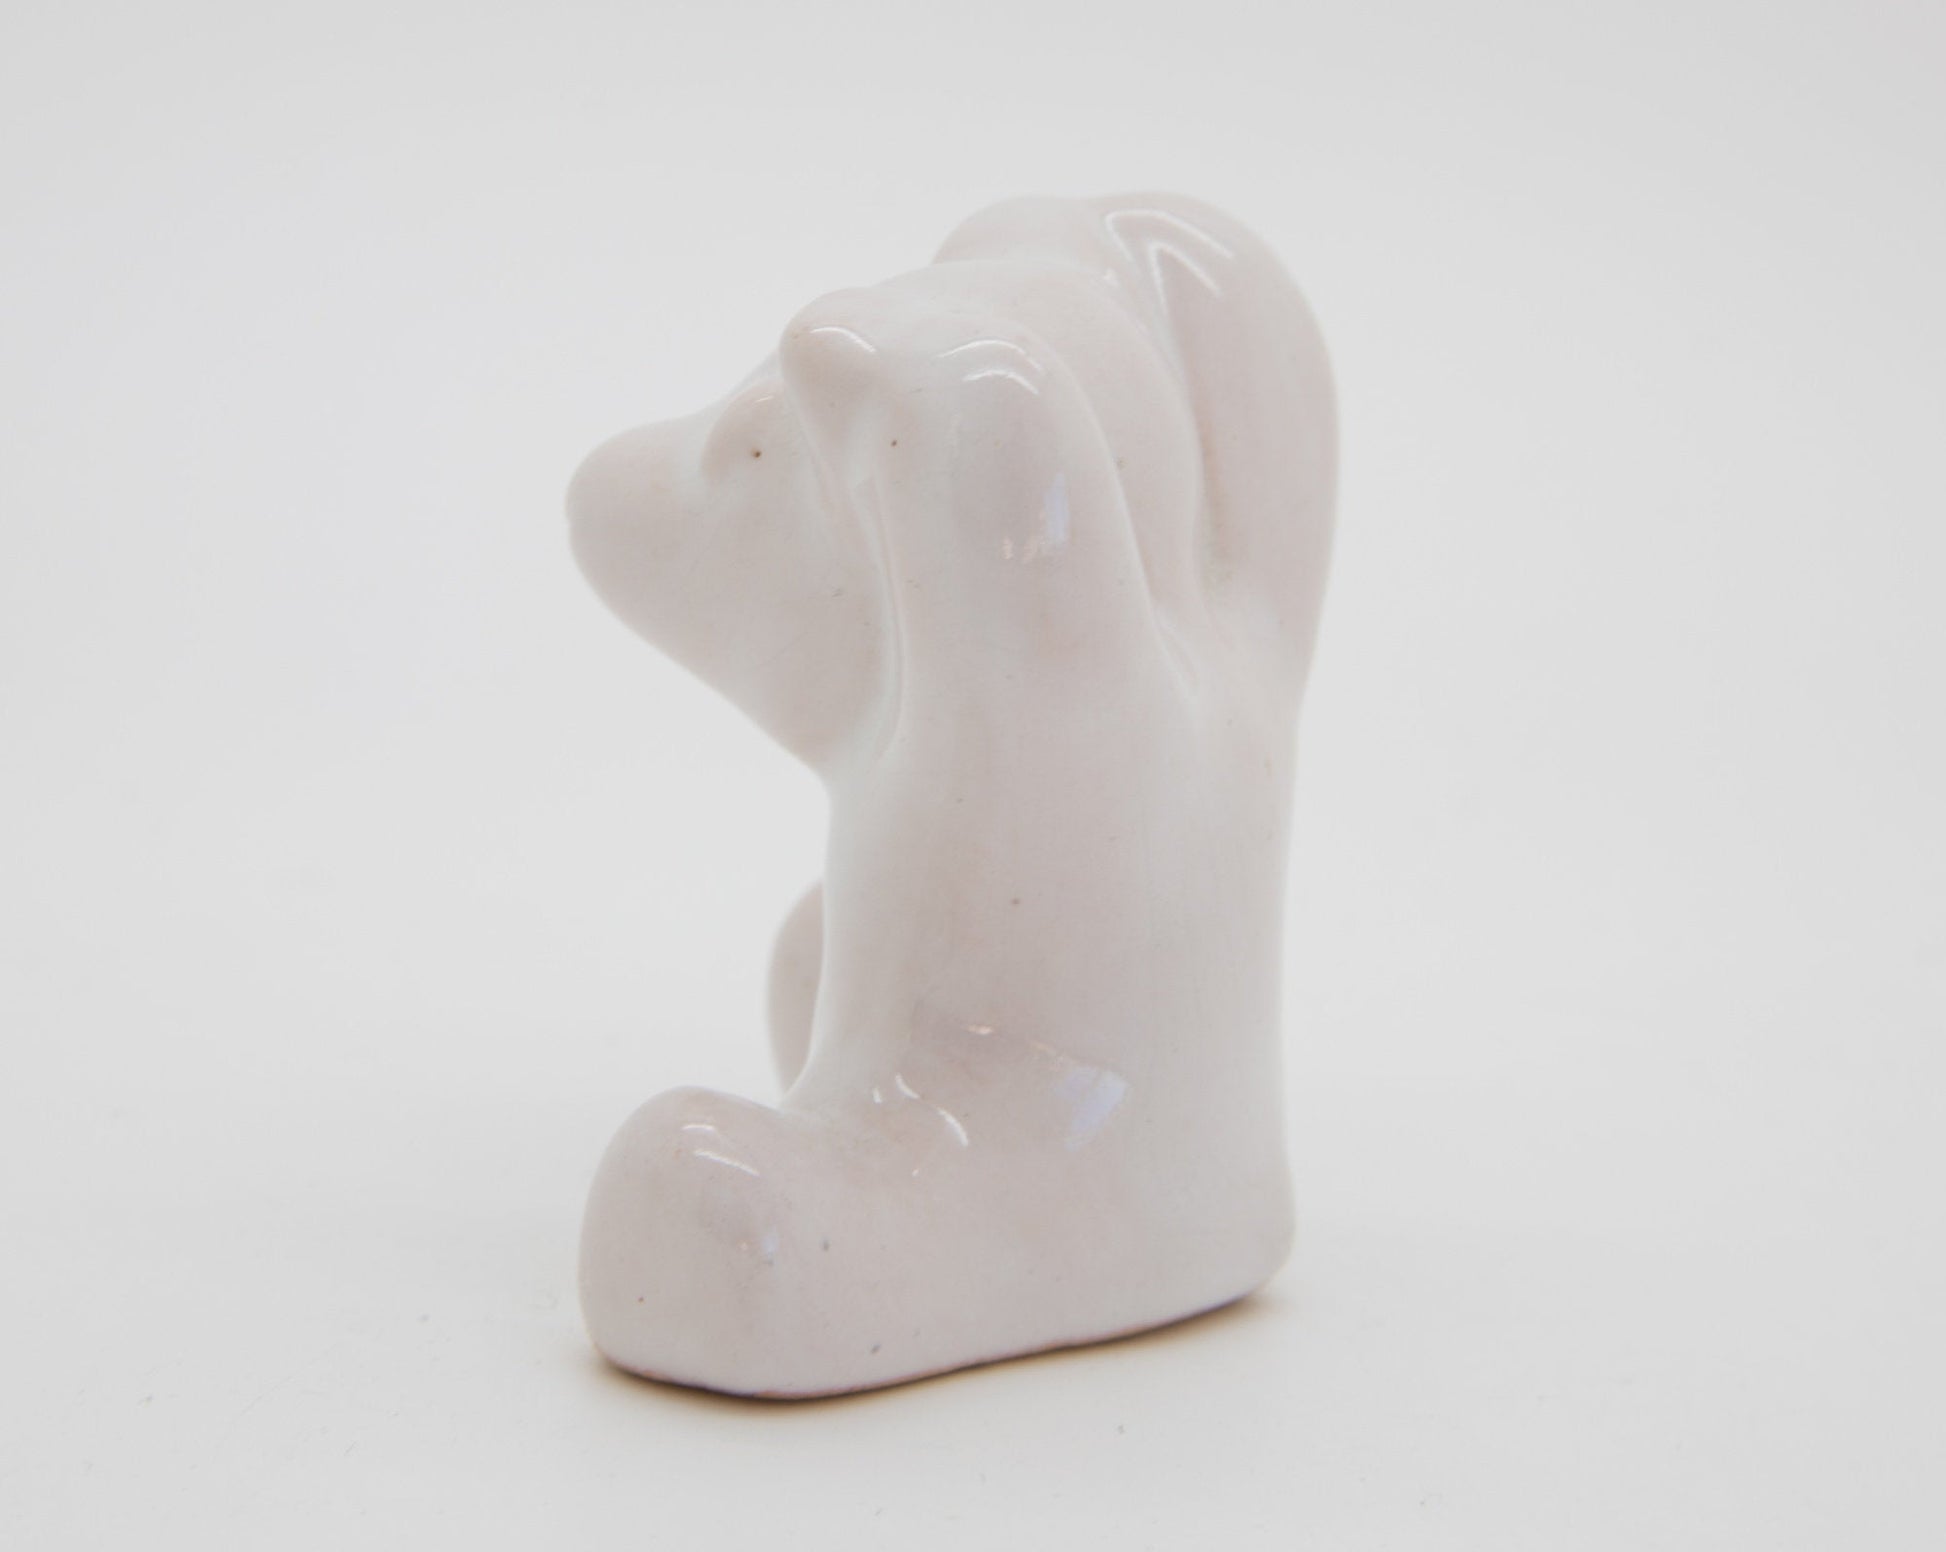 GERTRUD KUDIELKA L. Hjorth Bear Orchestra White Glazed Ceramic Bear Figurine Mollaris.com 